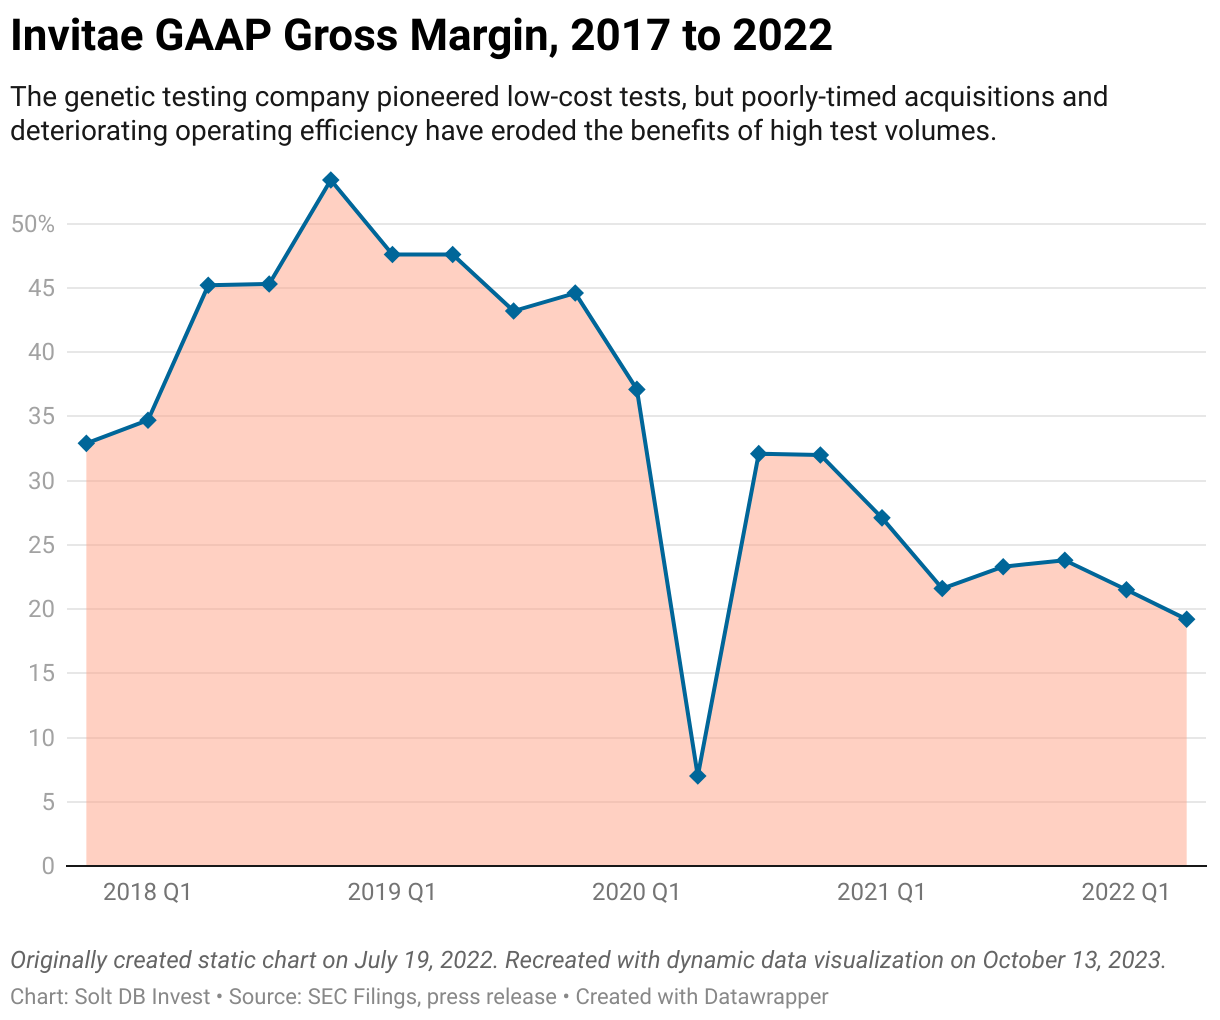 A line chart showing the GAAP gross margin of Invitae from Q4 2017 through Q2 2022.